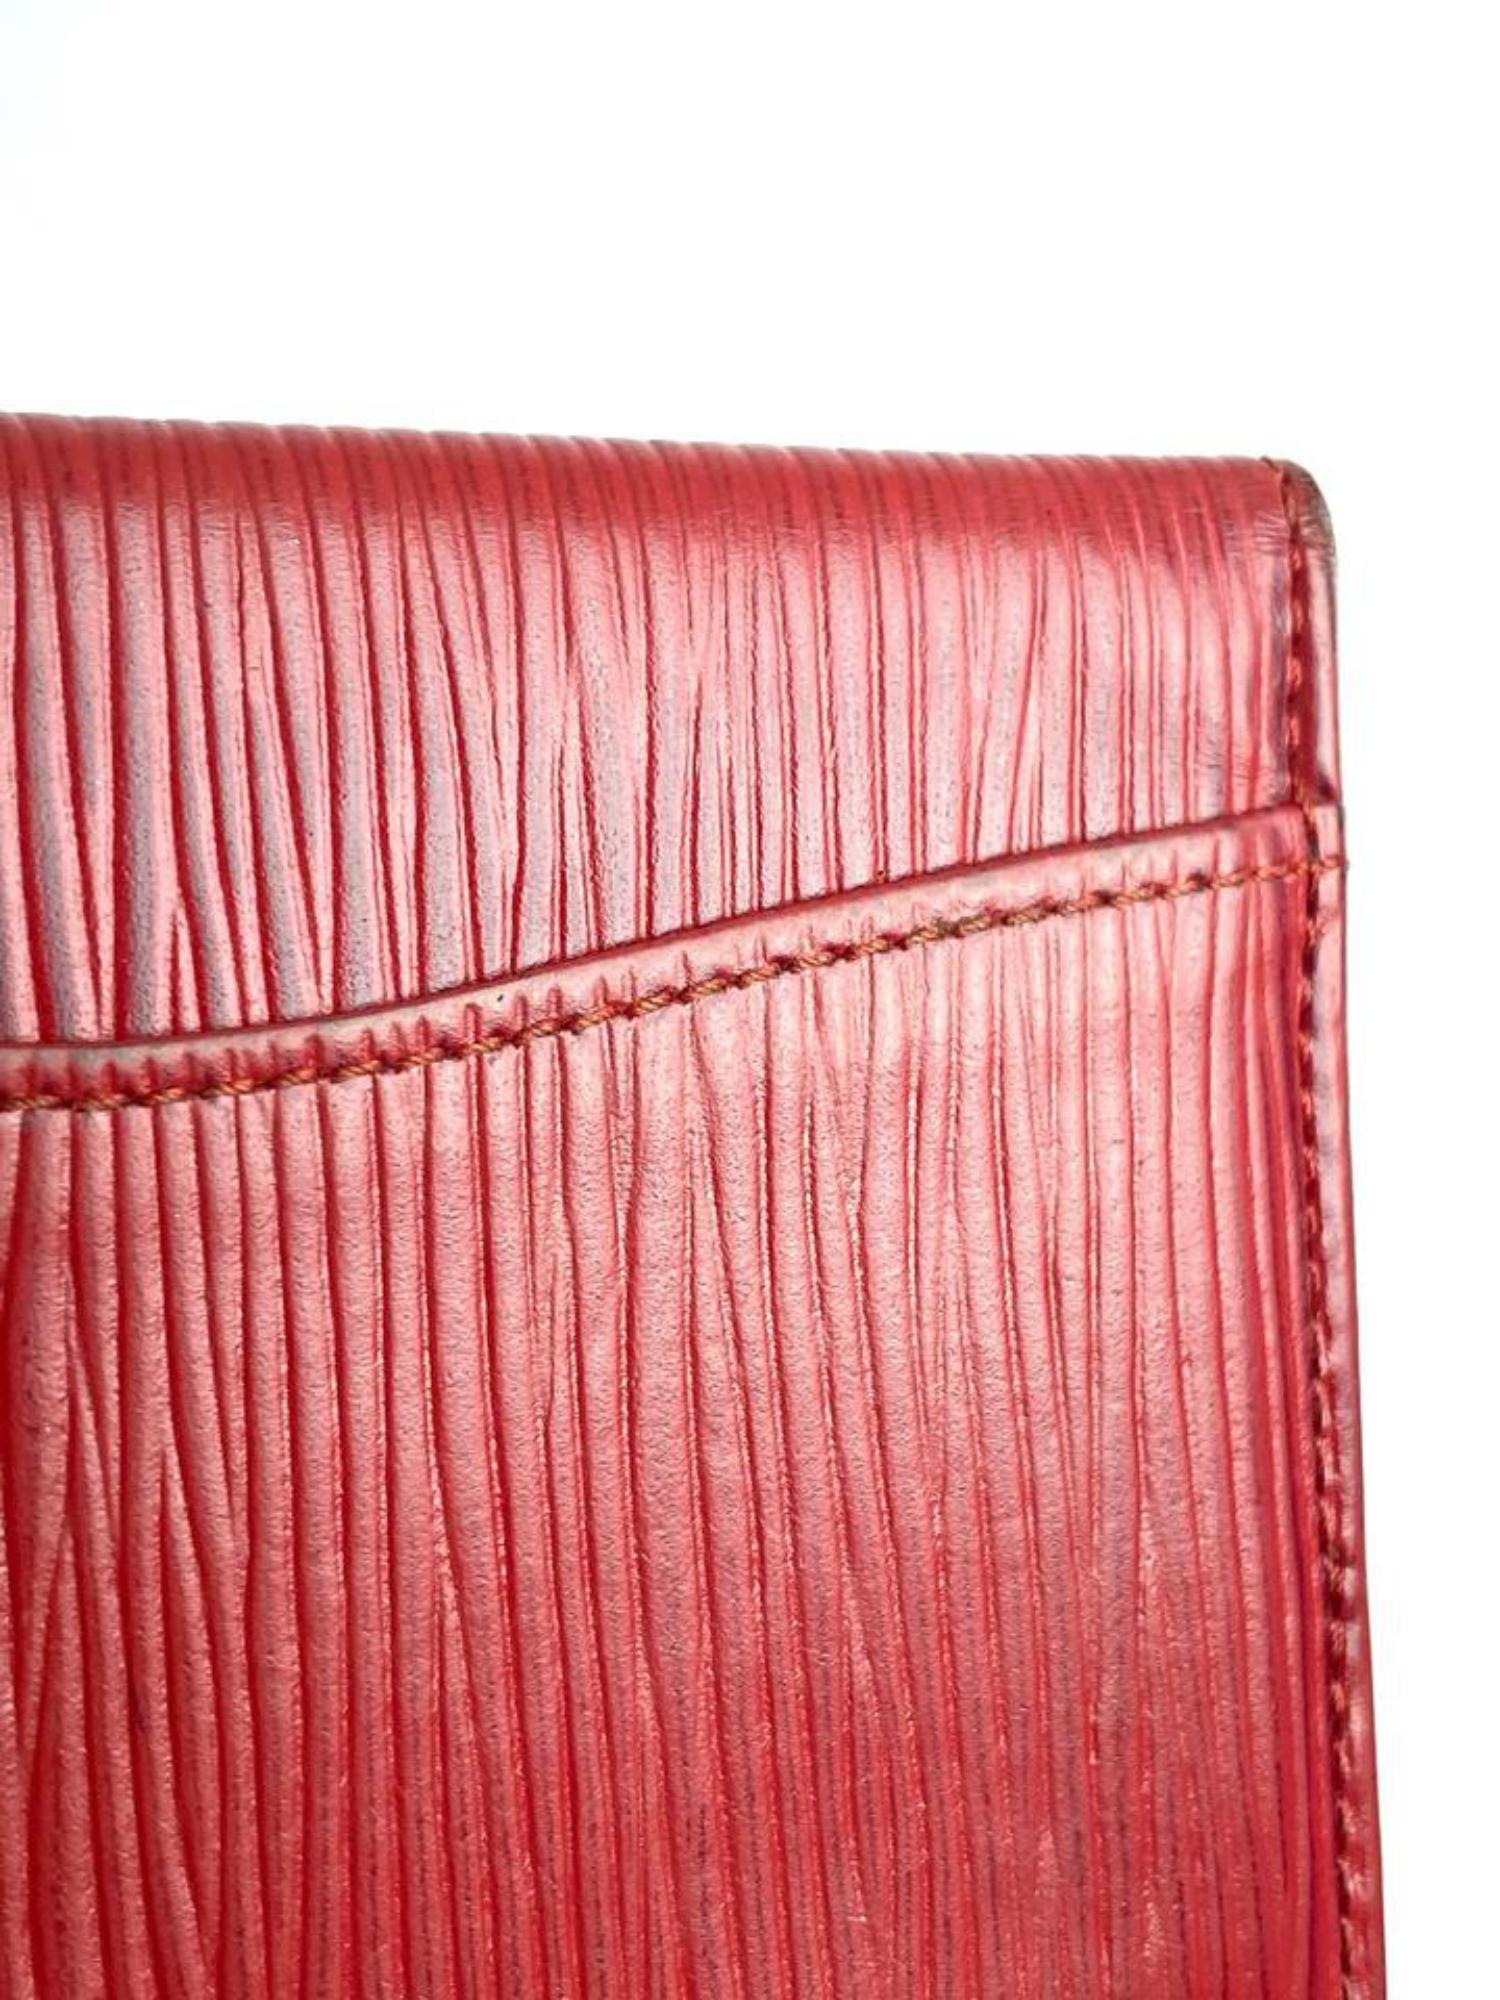 Women's Louis Vuitton Red Epi Leather Card Case Wallet Holder 5LVL1223